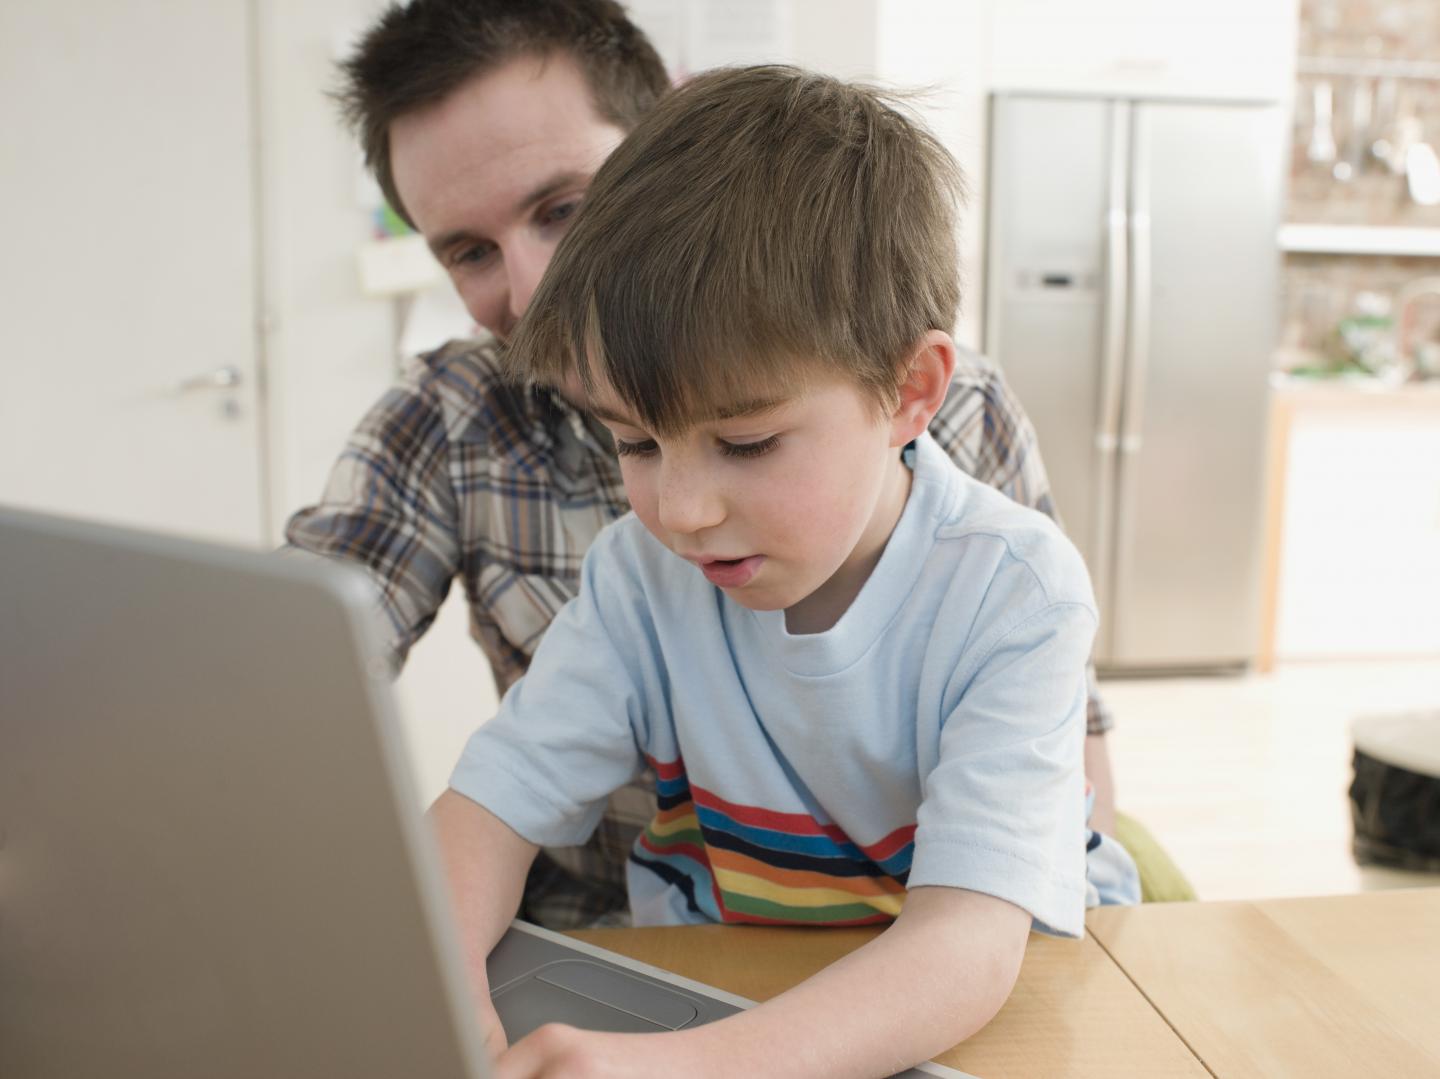 Online tools can help improve autism diagnosis